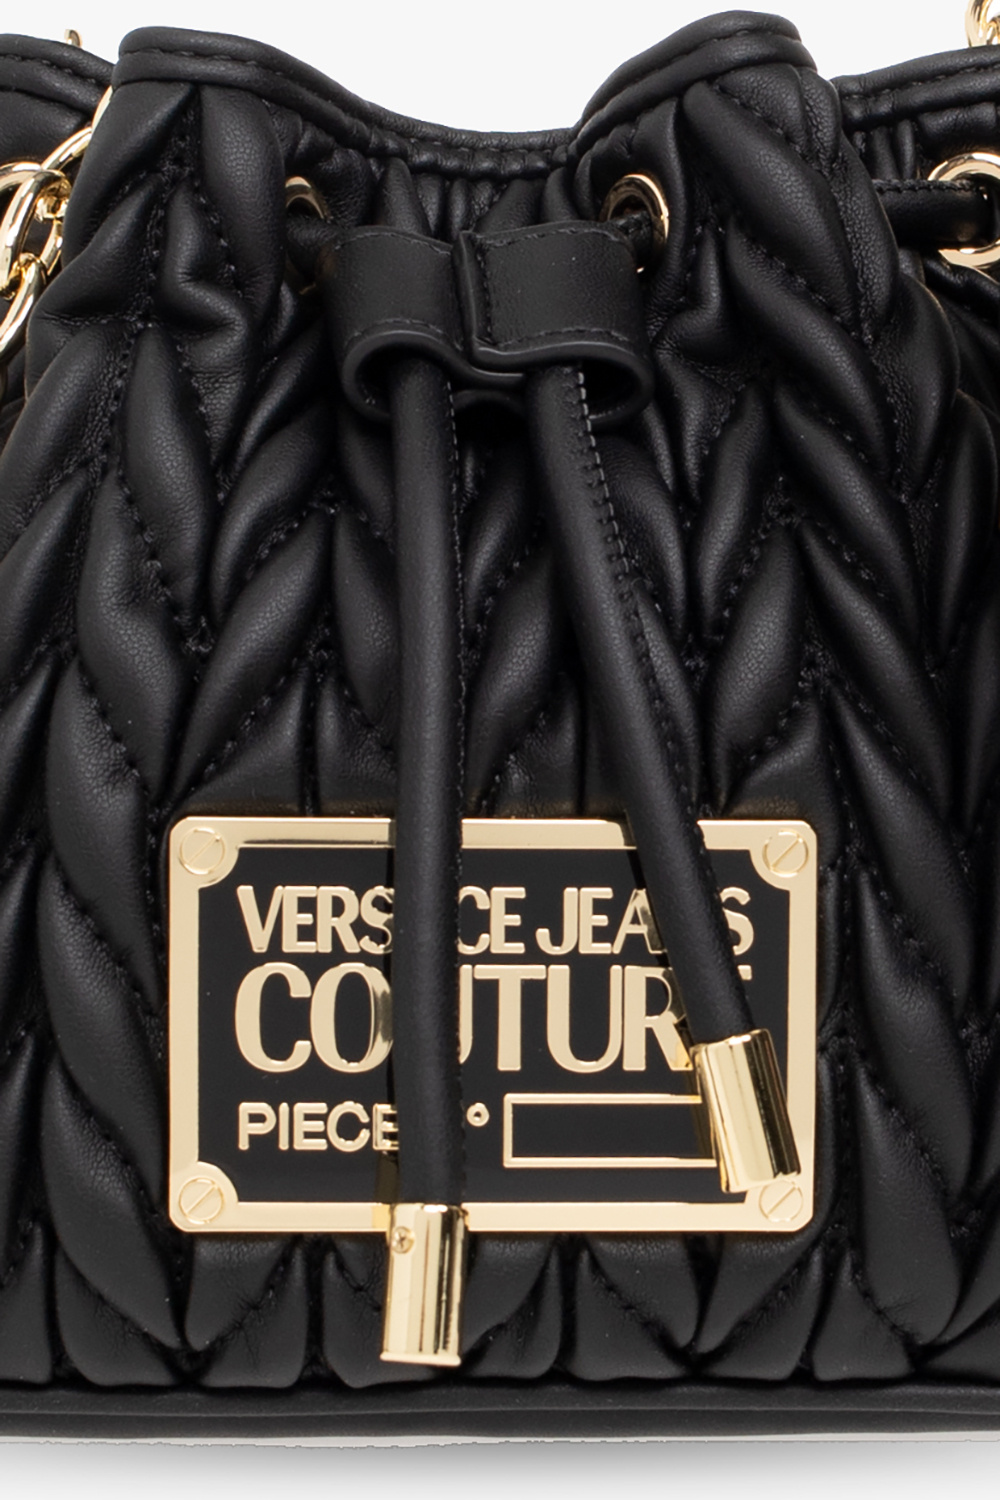 Bottega Veneta Black Calfskin Leather The Pouch Clutch Bag